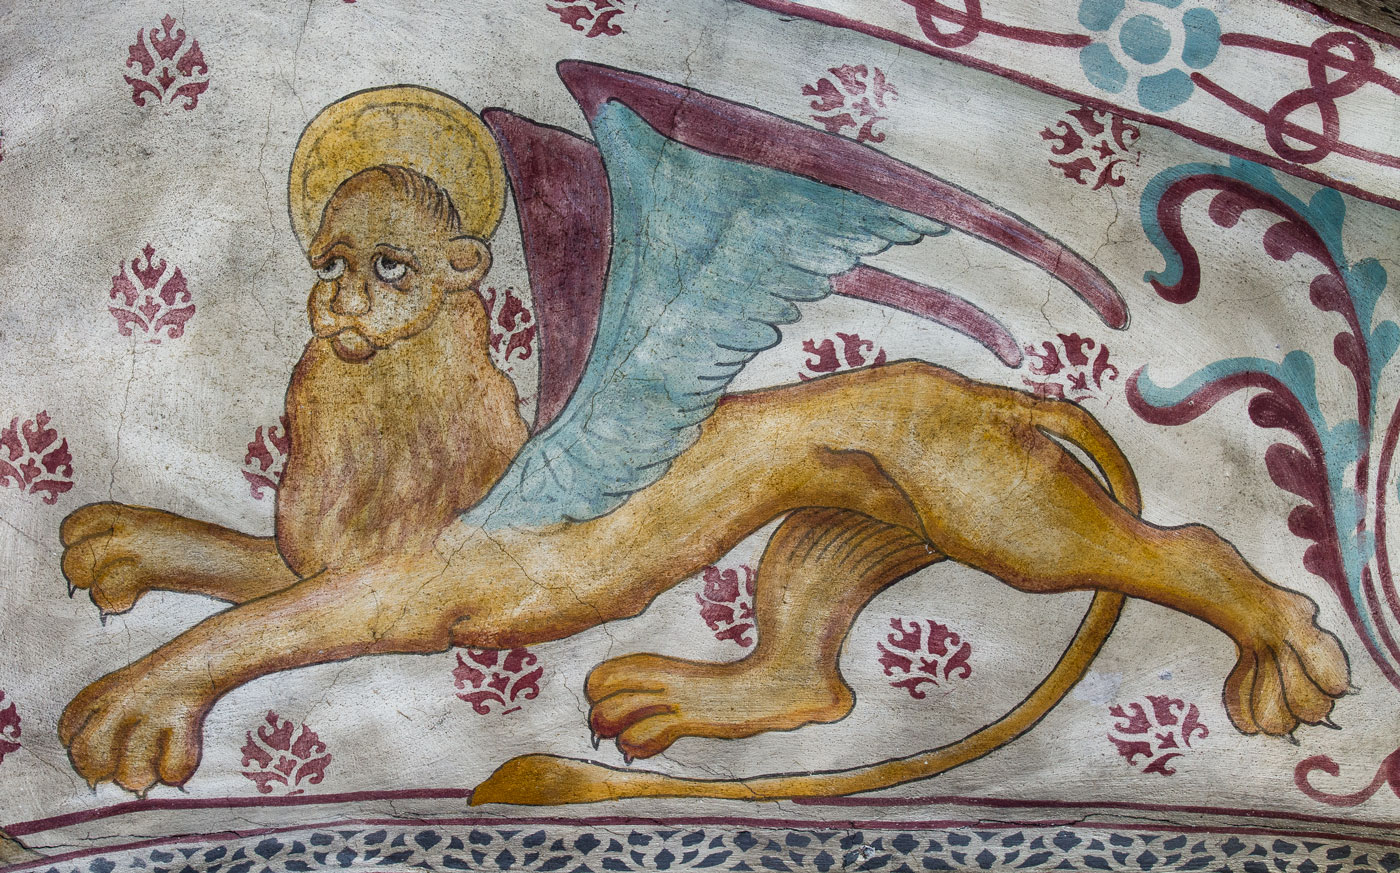 Evangelisten Markus symbol, ett lejon (N) - Vansö kyrka